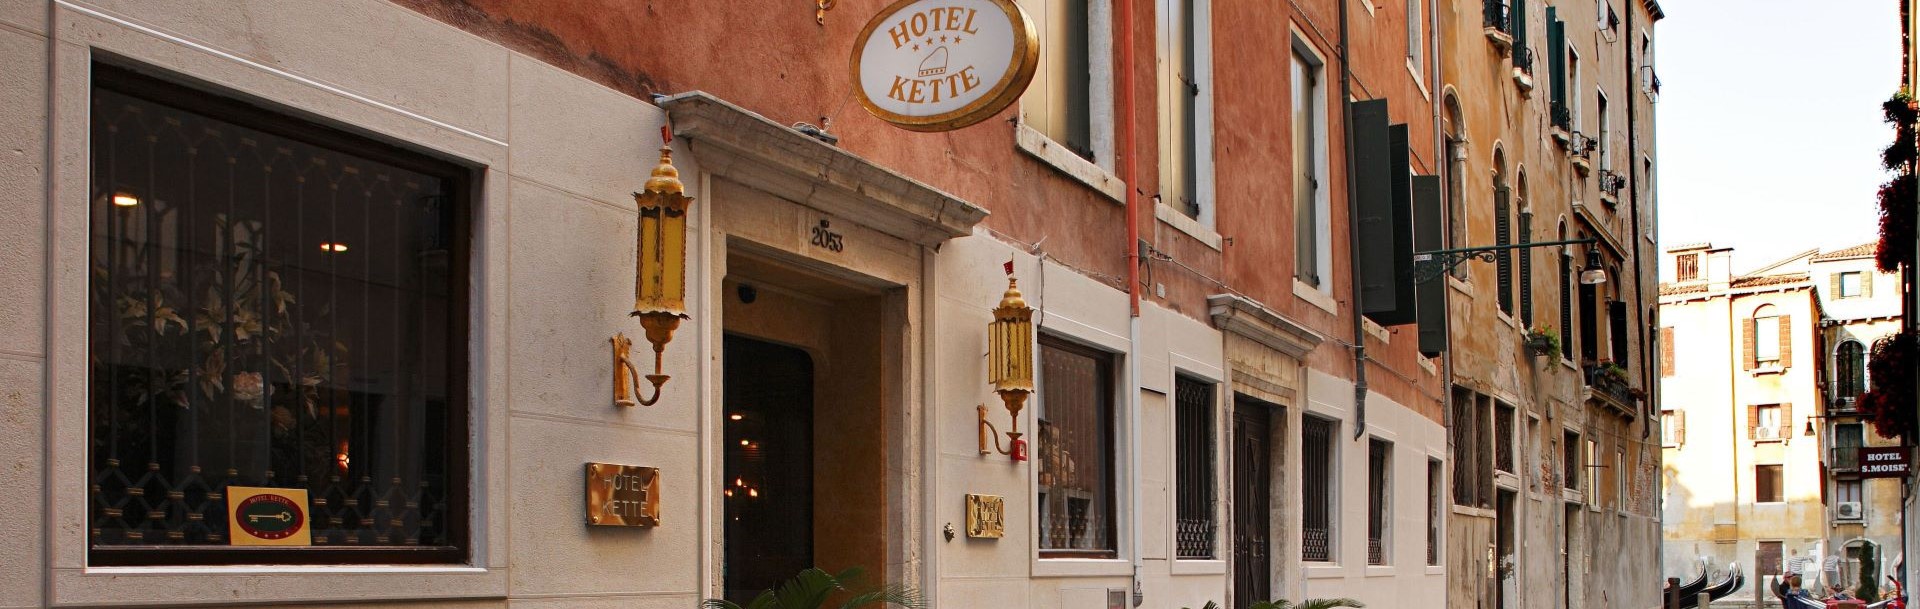 Kette Hotel Venice